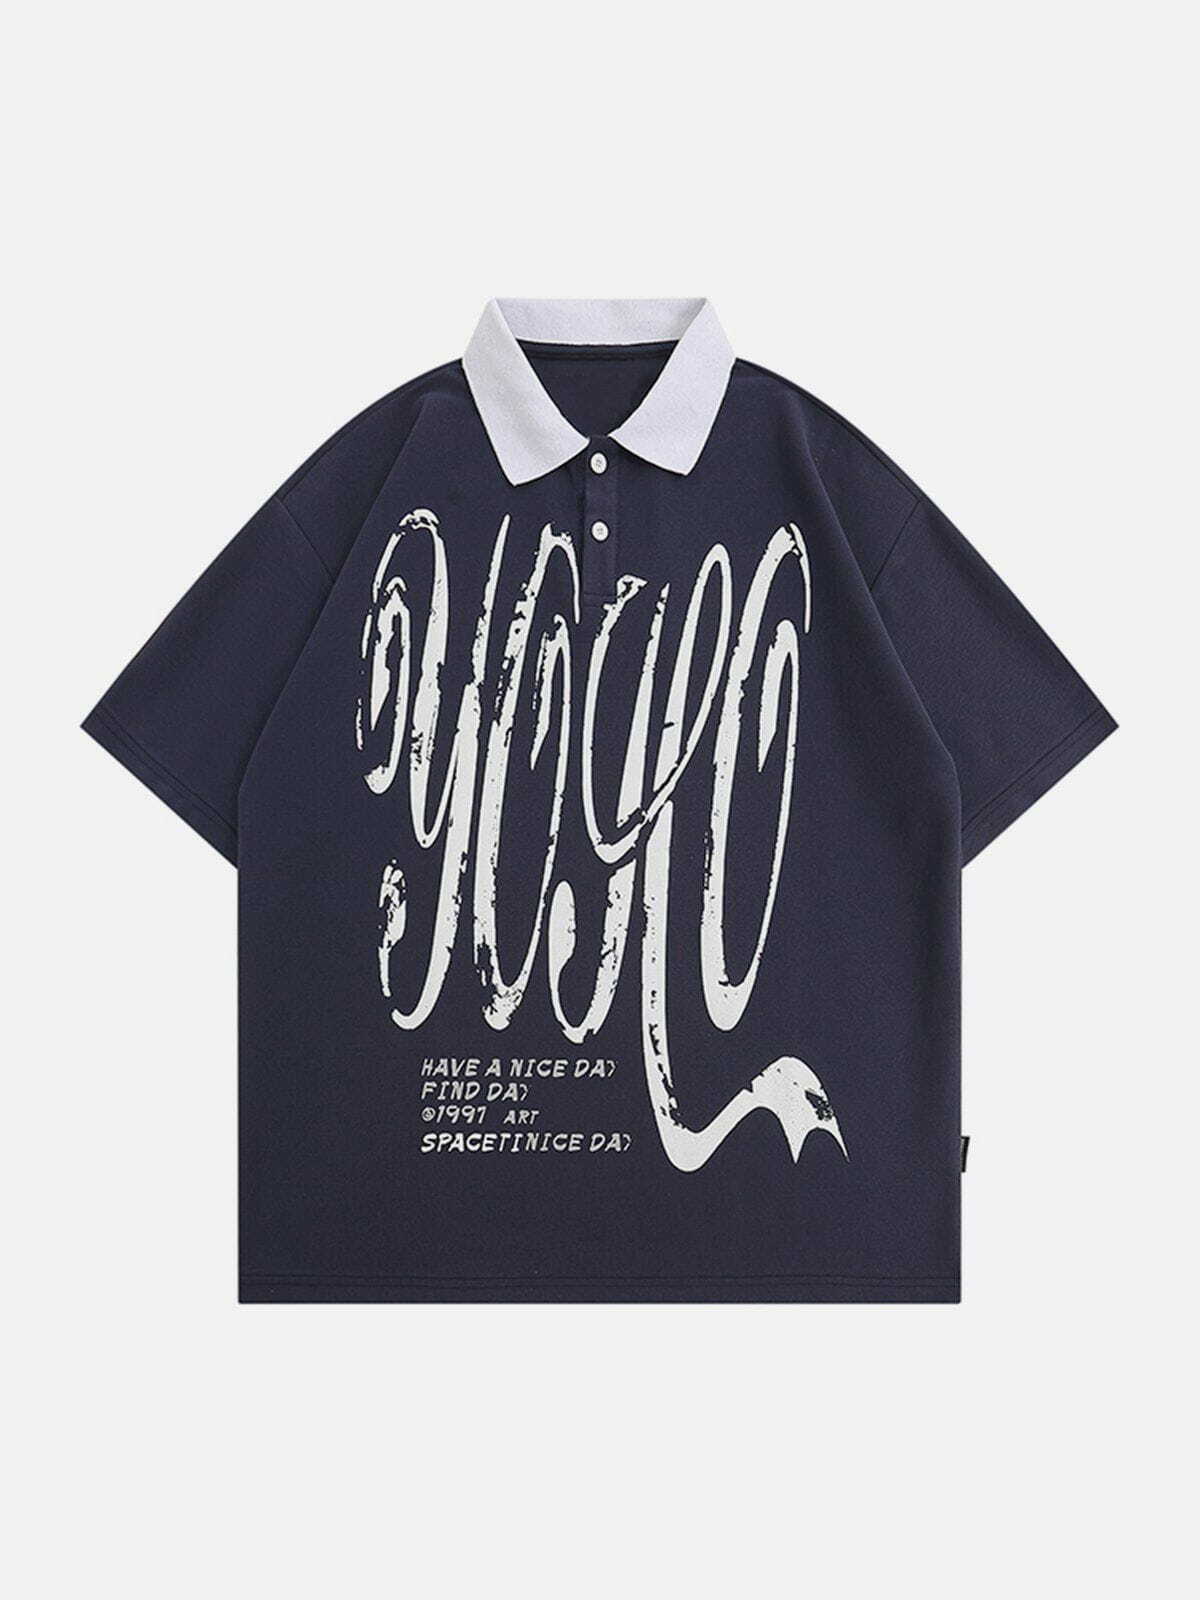 revamped graffiti polo tee edgy streetwear fashion shirts 5079